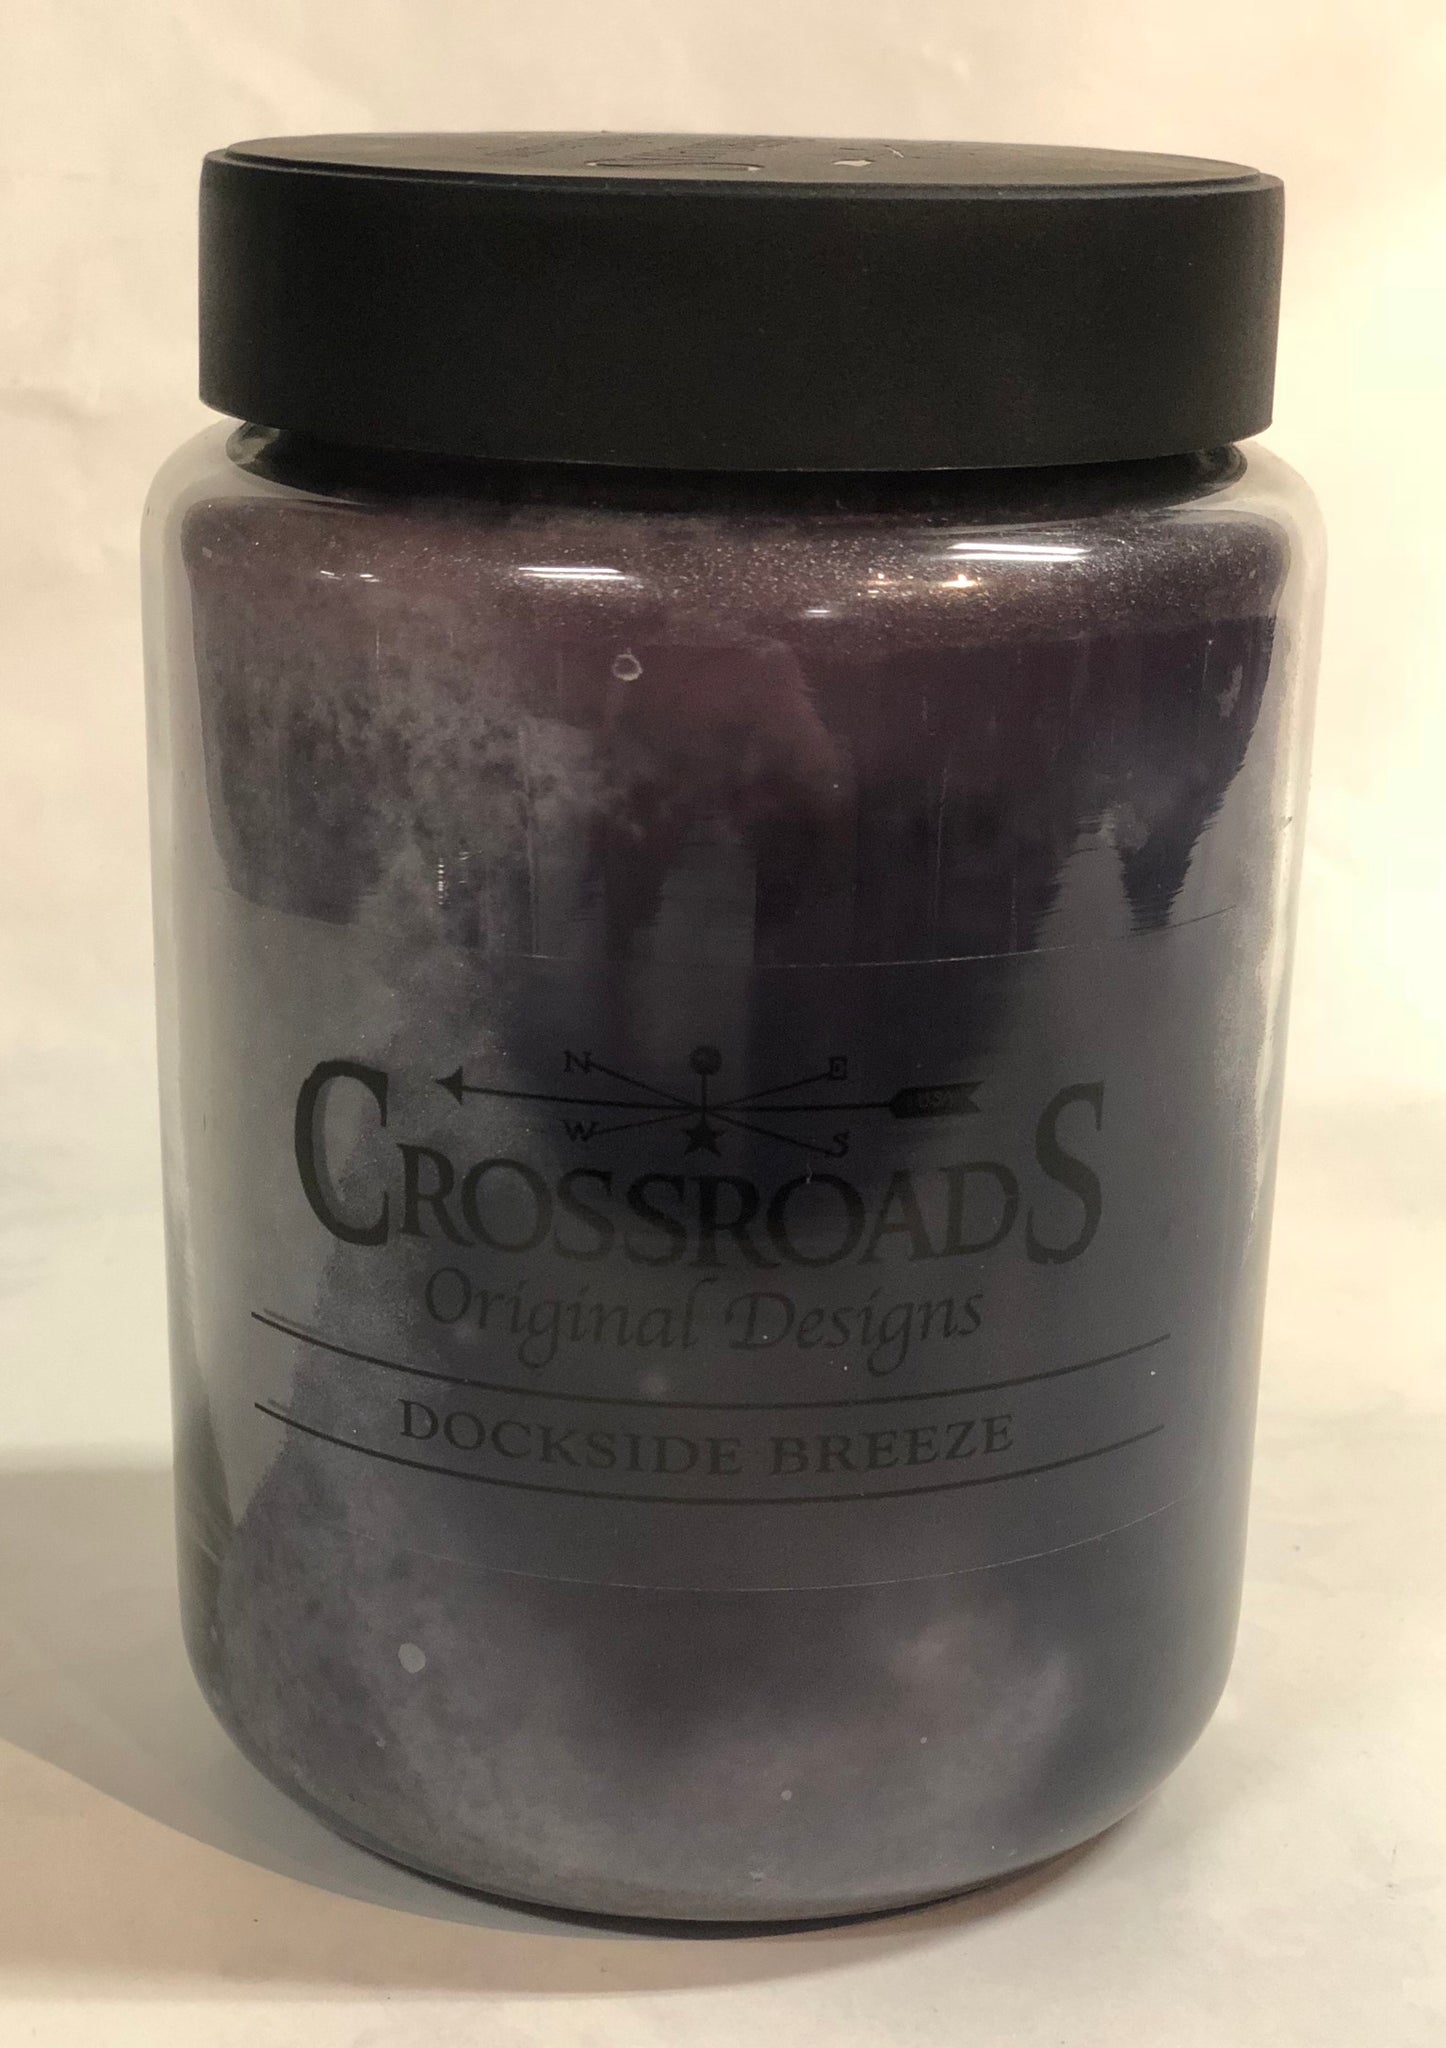 Crossroads Jar Candle - Dockside Breeze